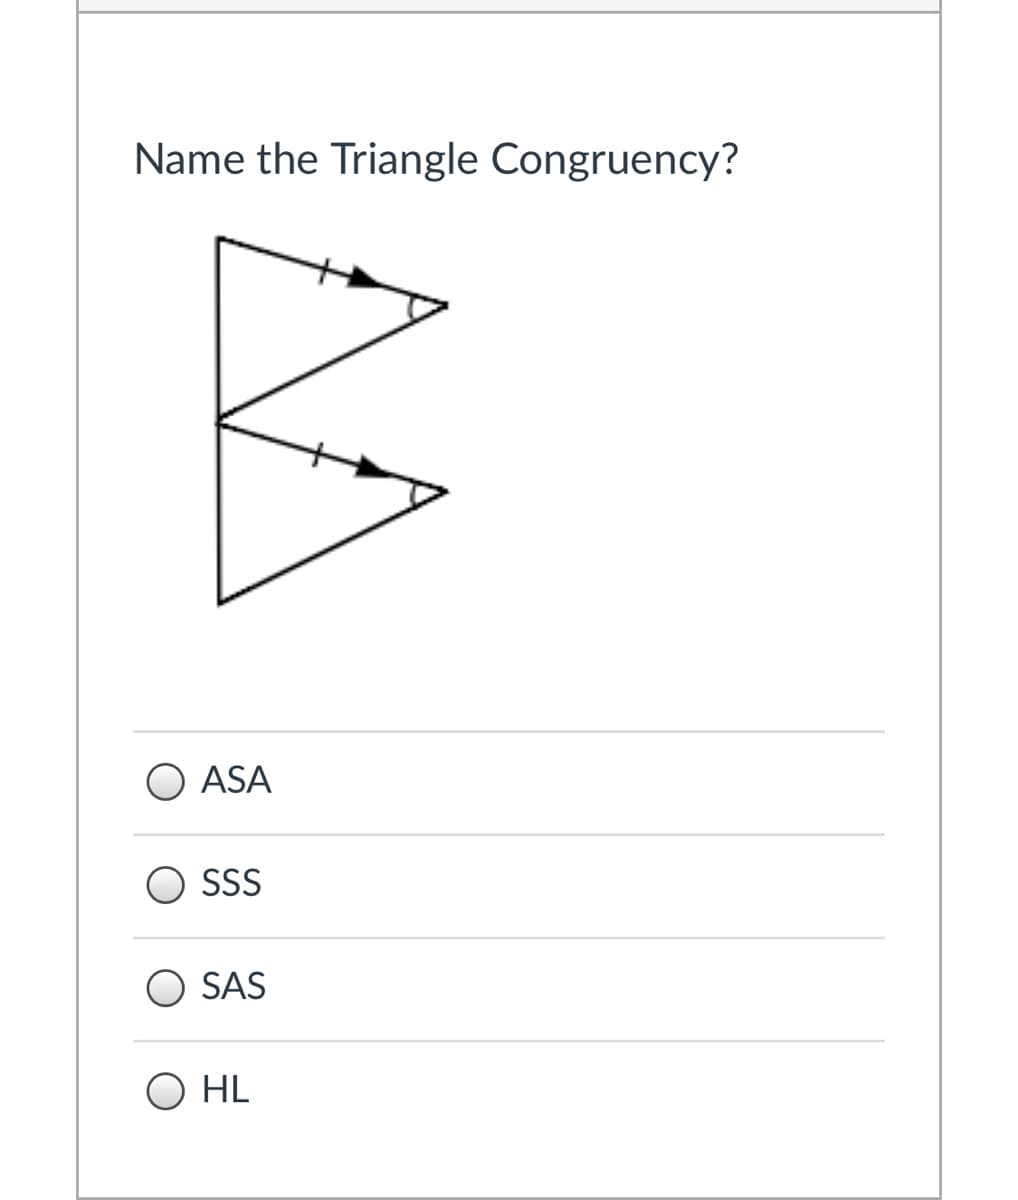 Name the Triangle Congruency?
ASA
O SSS
SAS
O HL
